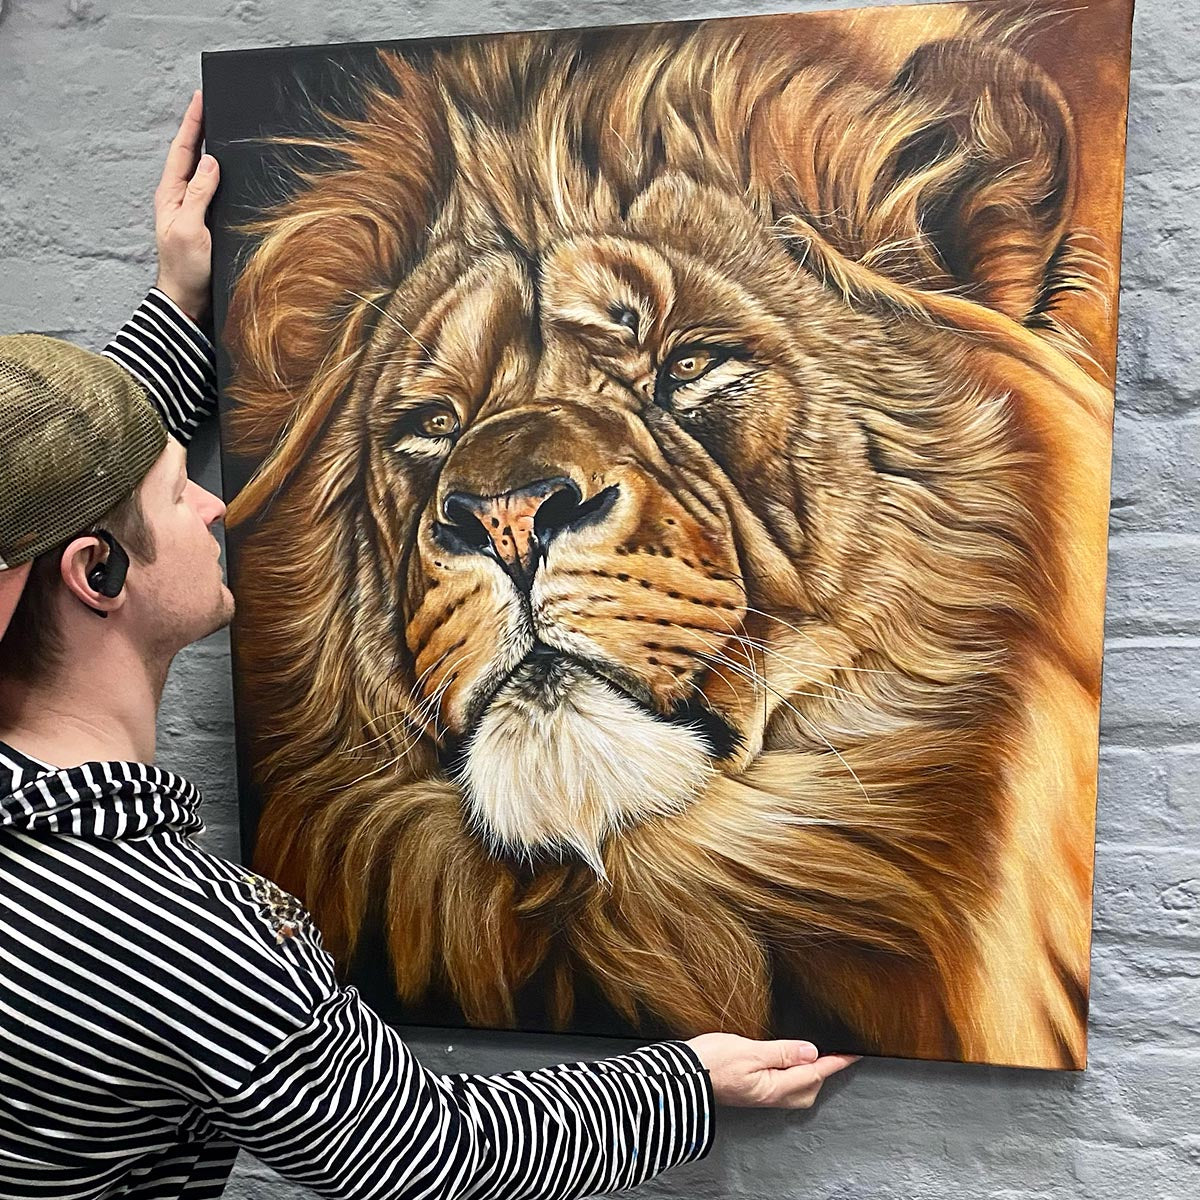 Irish-artist-steven-farrell-holding-lion-painting-realism-style